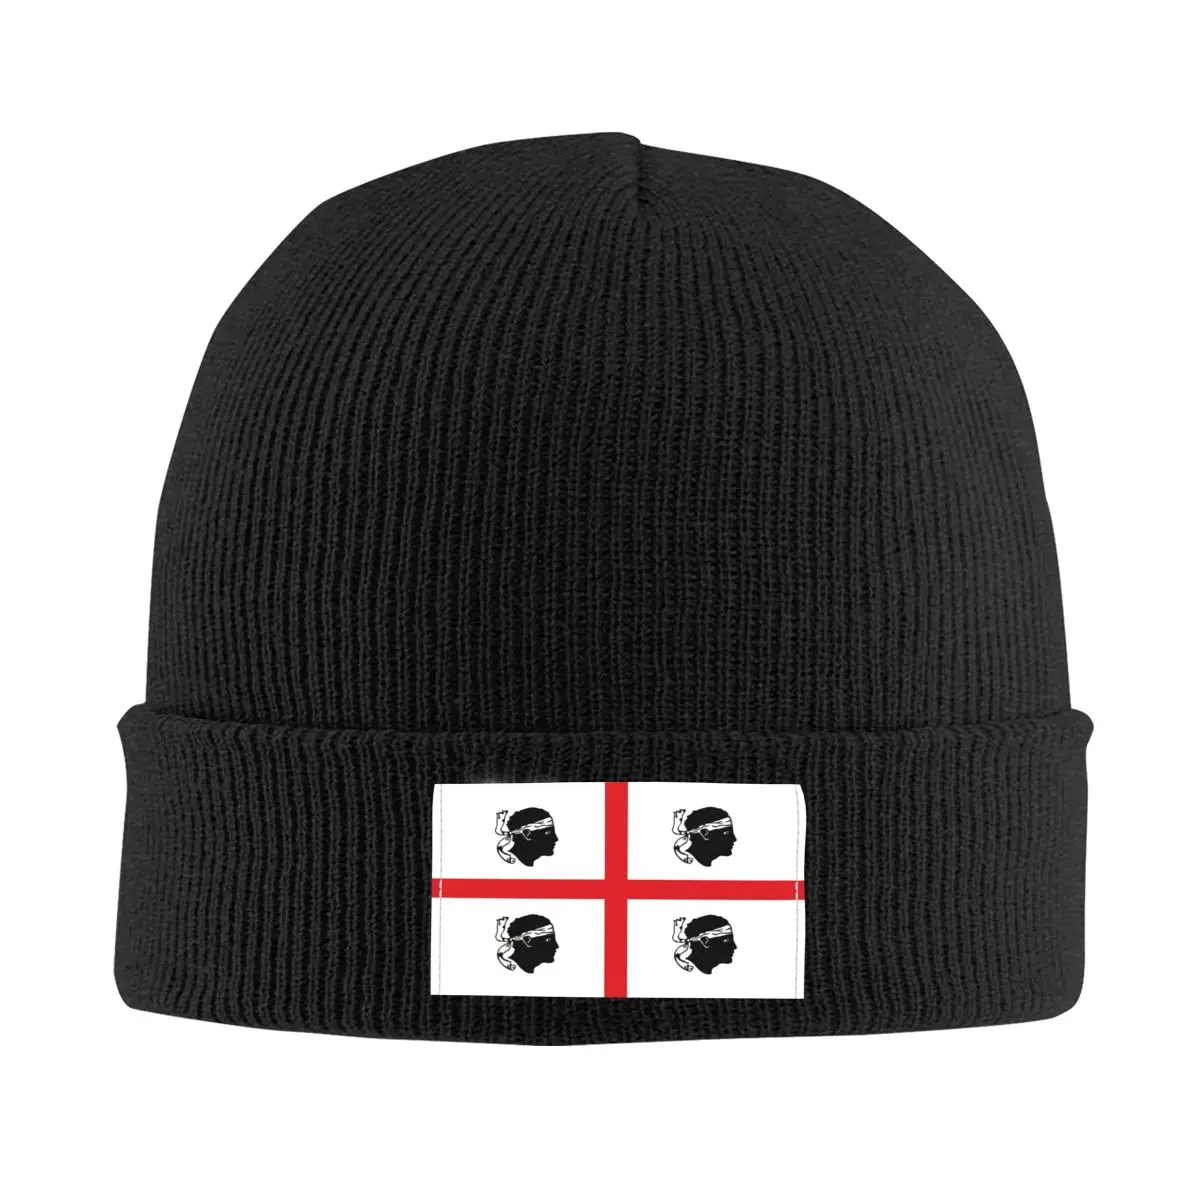 Flag Of Sardinia Skullies Beanies Caps For Men Women Unisex Outdoor Winter Warm Knit Hat Adult Italy Sardegna Bonnet Hats 1